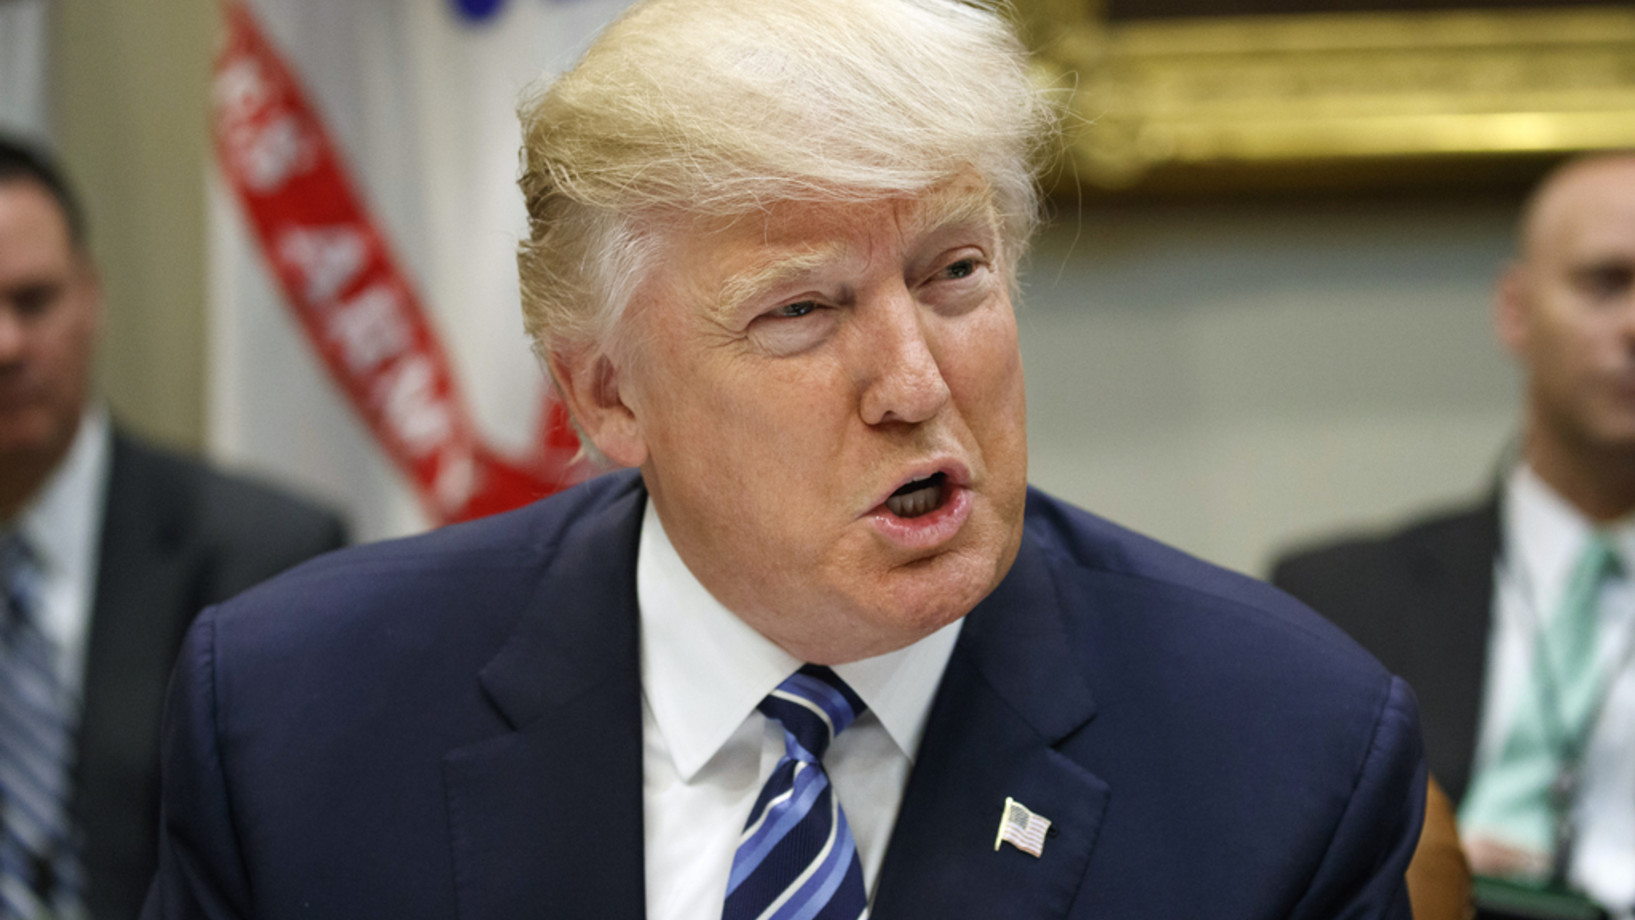 Trump am 9. Februar 2017 im Weissen Haus (Foto: Keystone/AP/Evan Vucci)
